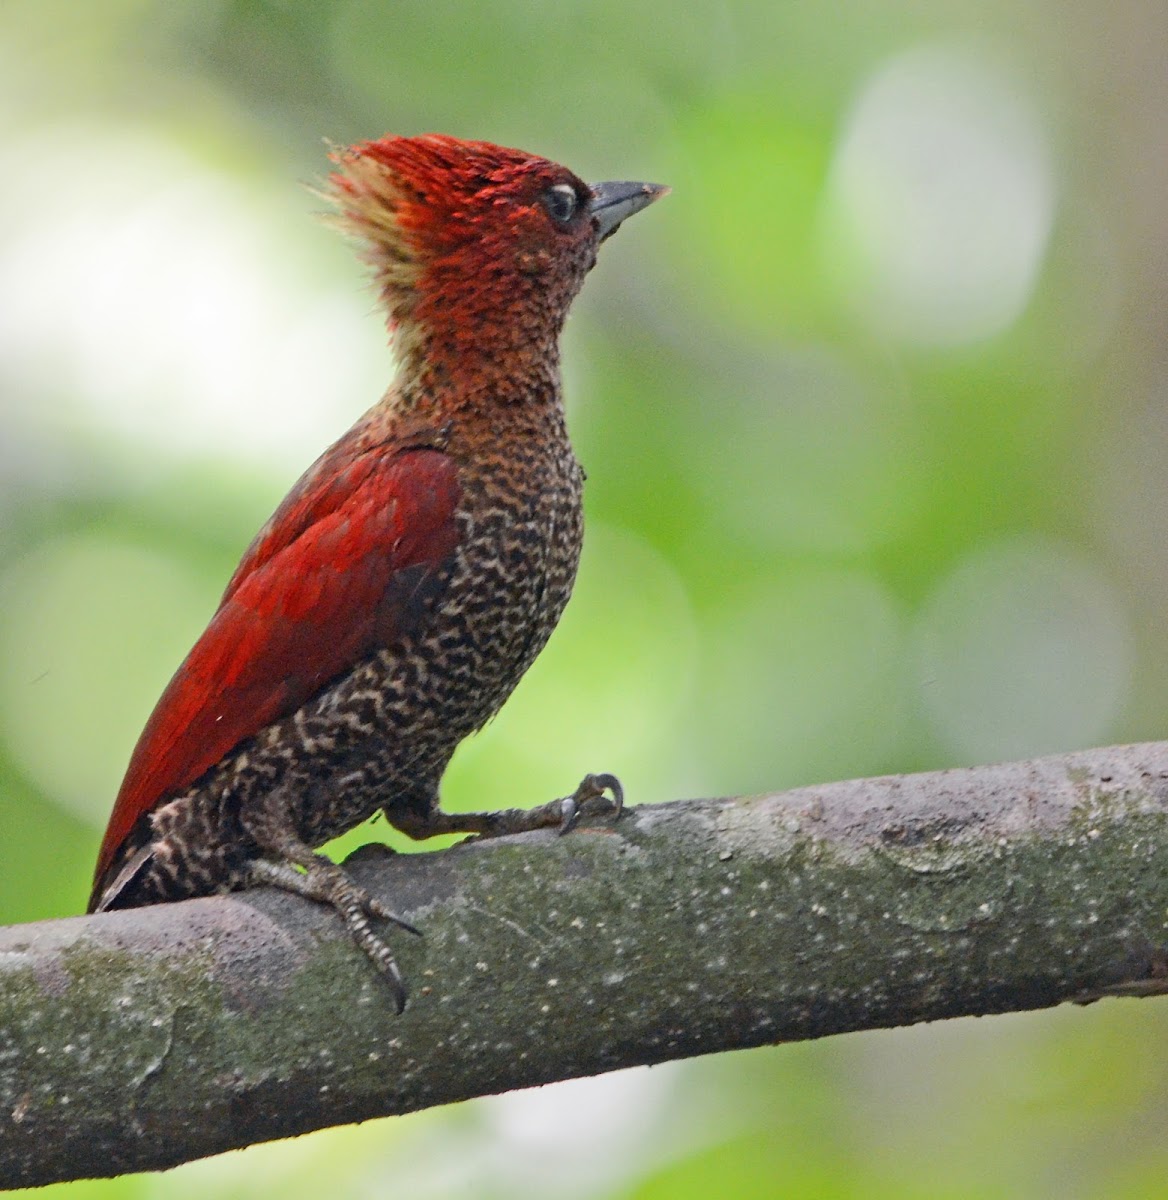 Banded woodpecker